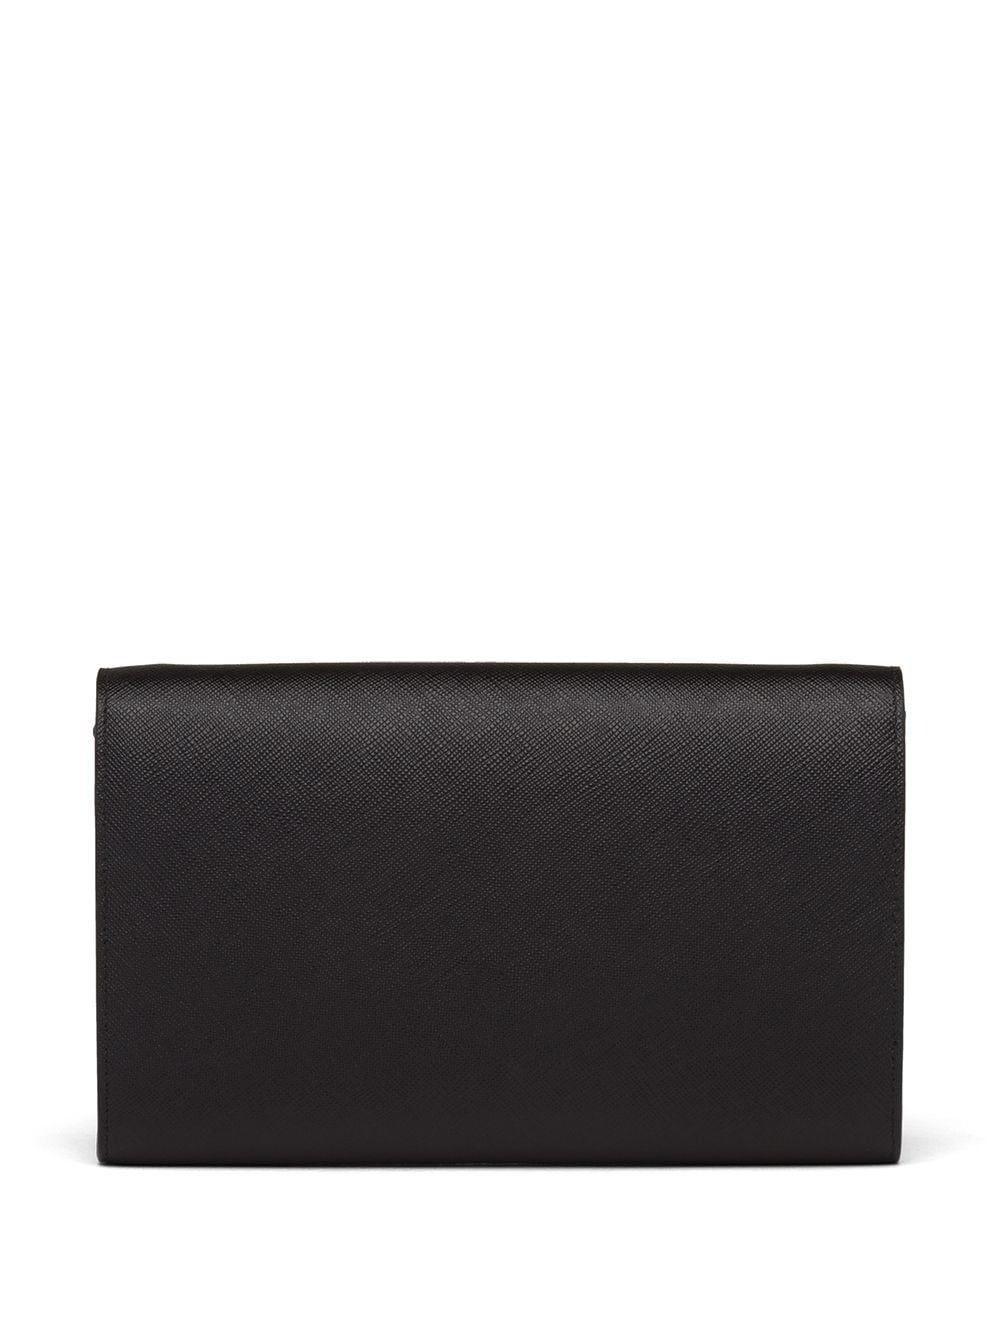 Prada Saffiano leather wallet with shoulder strap